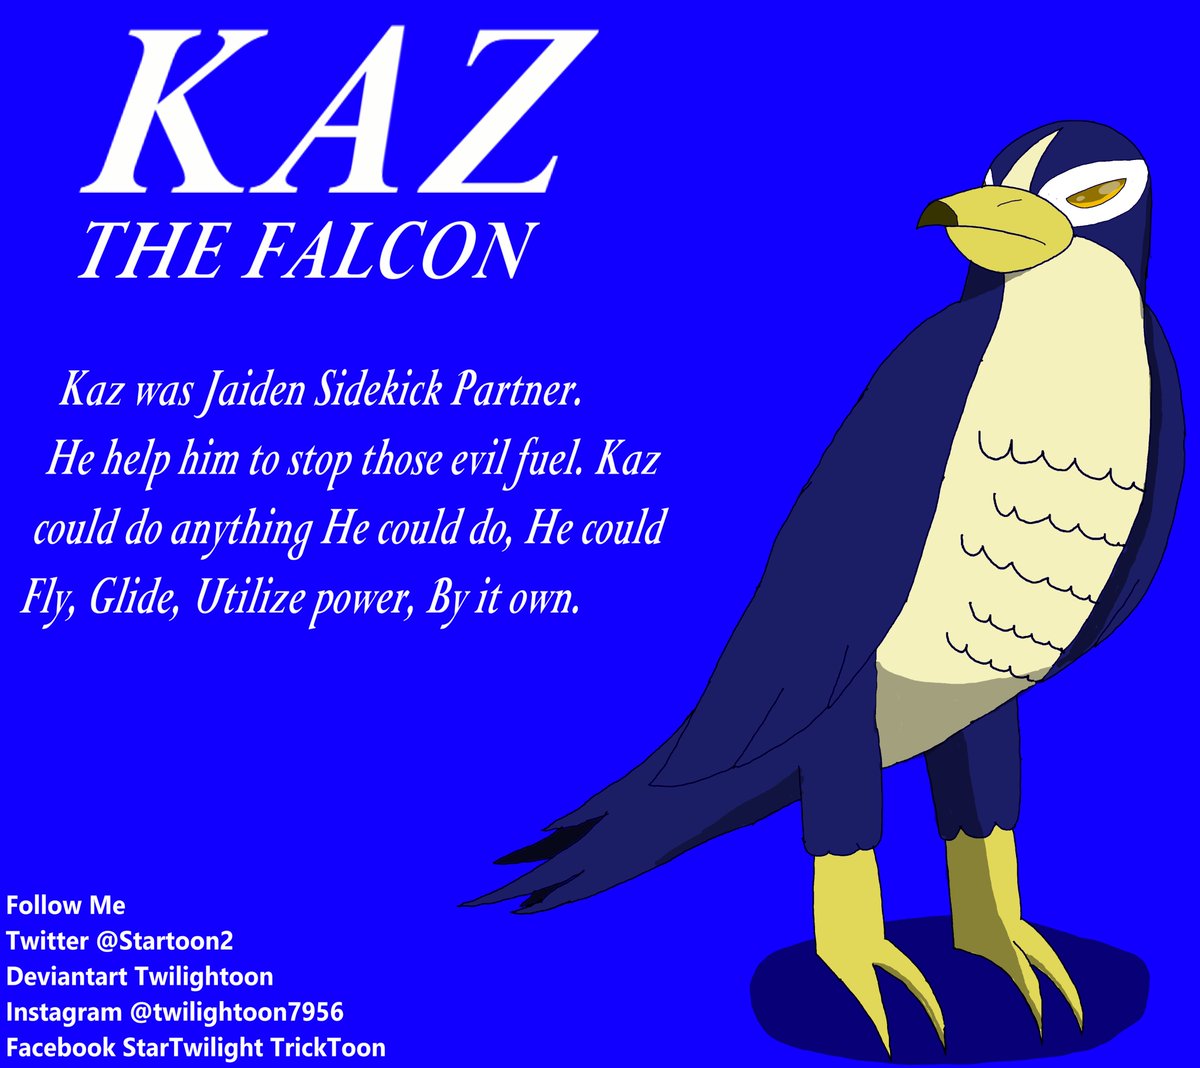 Meet Kaz The Falcon OC. He Jaiden Partner. I gave His Ultilize power. So Yeah Hope You Guys Like Him.
Like, Follow, Comment, Retweet.
#originalcharacter #originalcharacterart #originalcharacters #OC #OCart #Falcon #Mangaart #Otakuart #Animeart #Krita #characterart